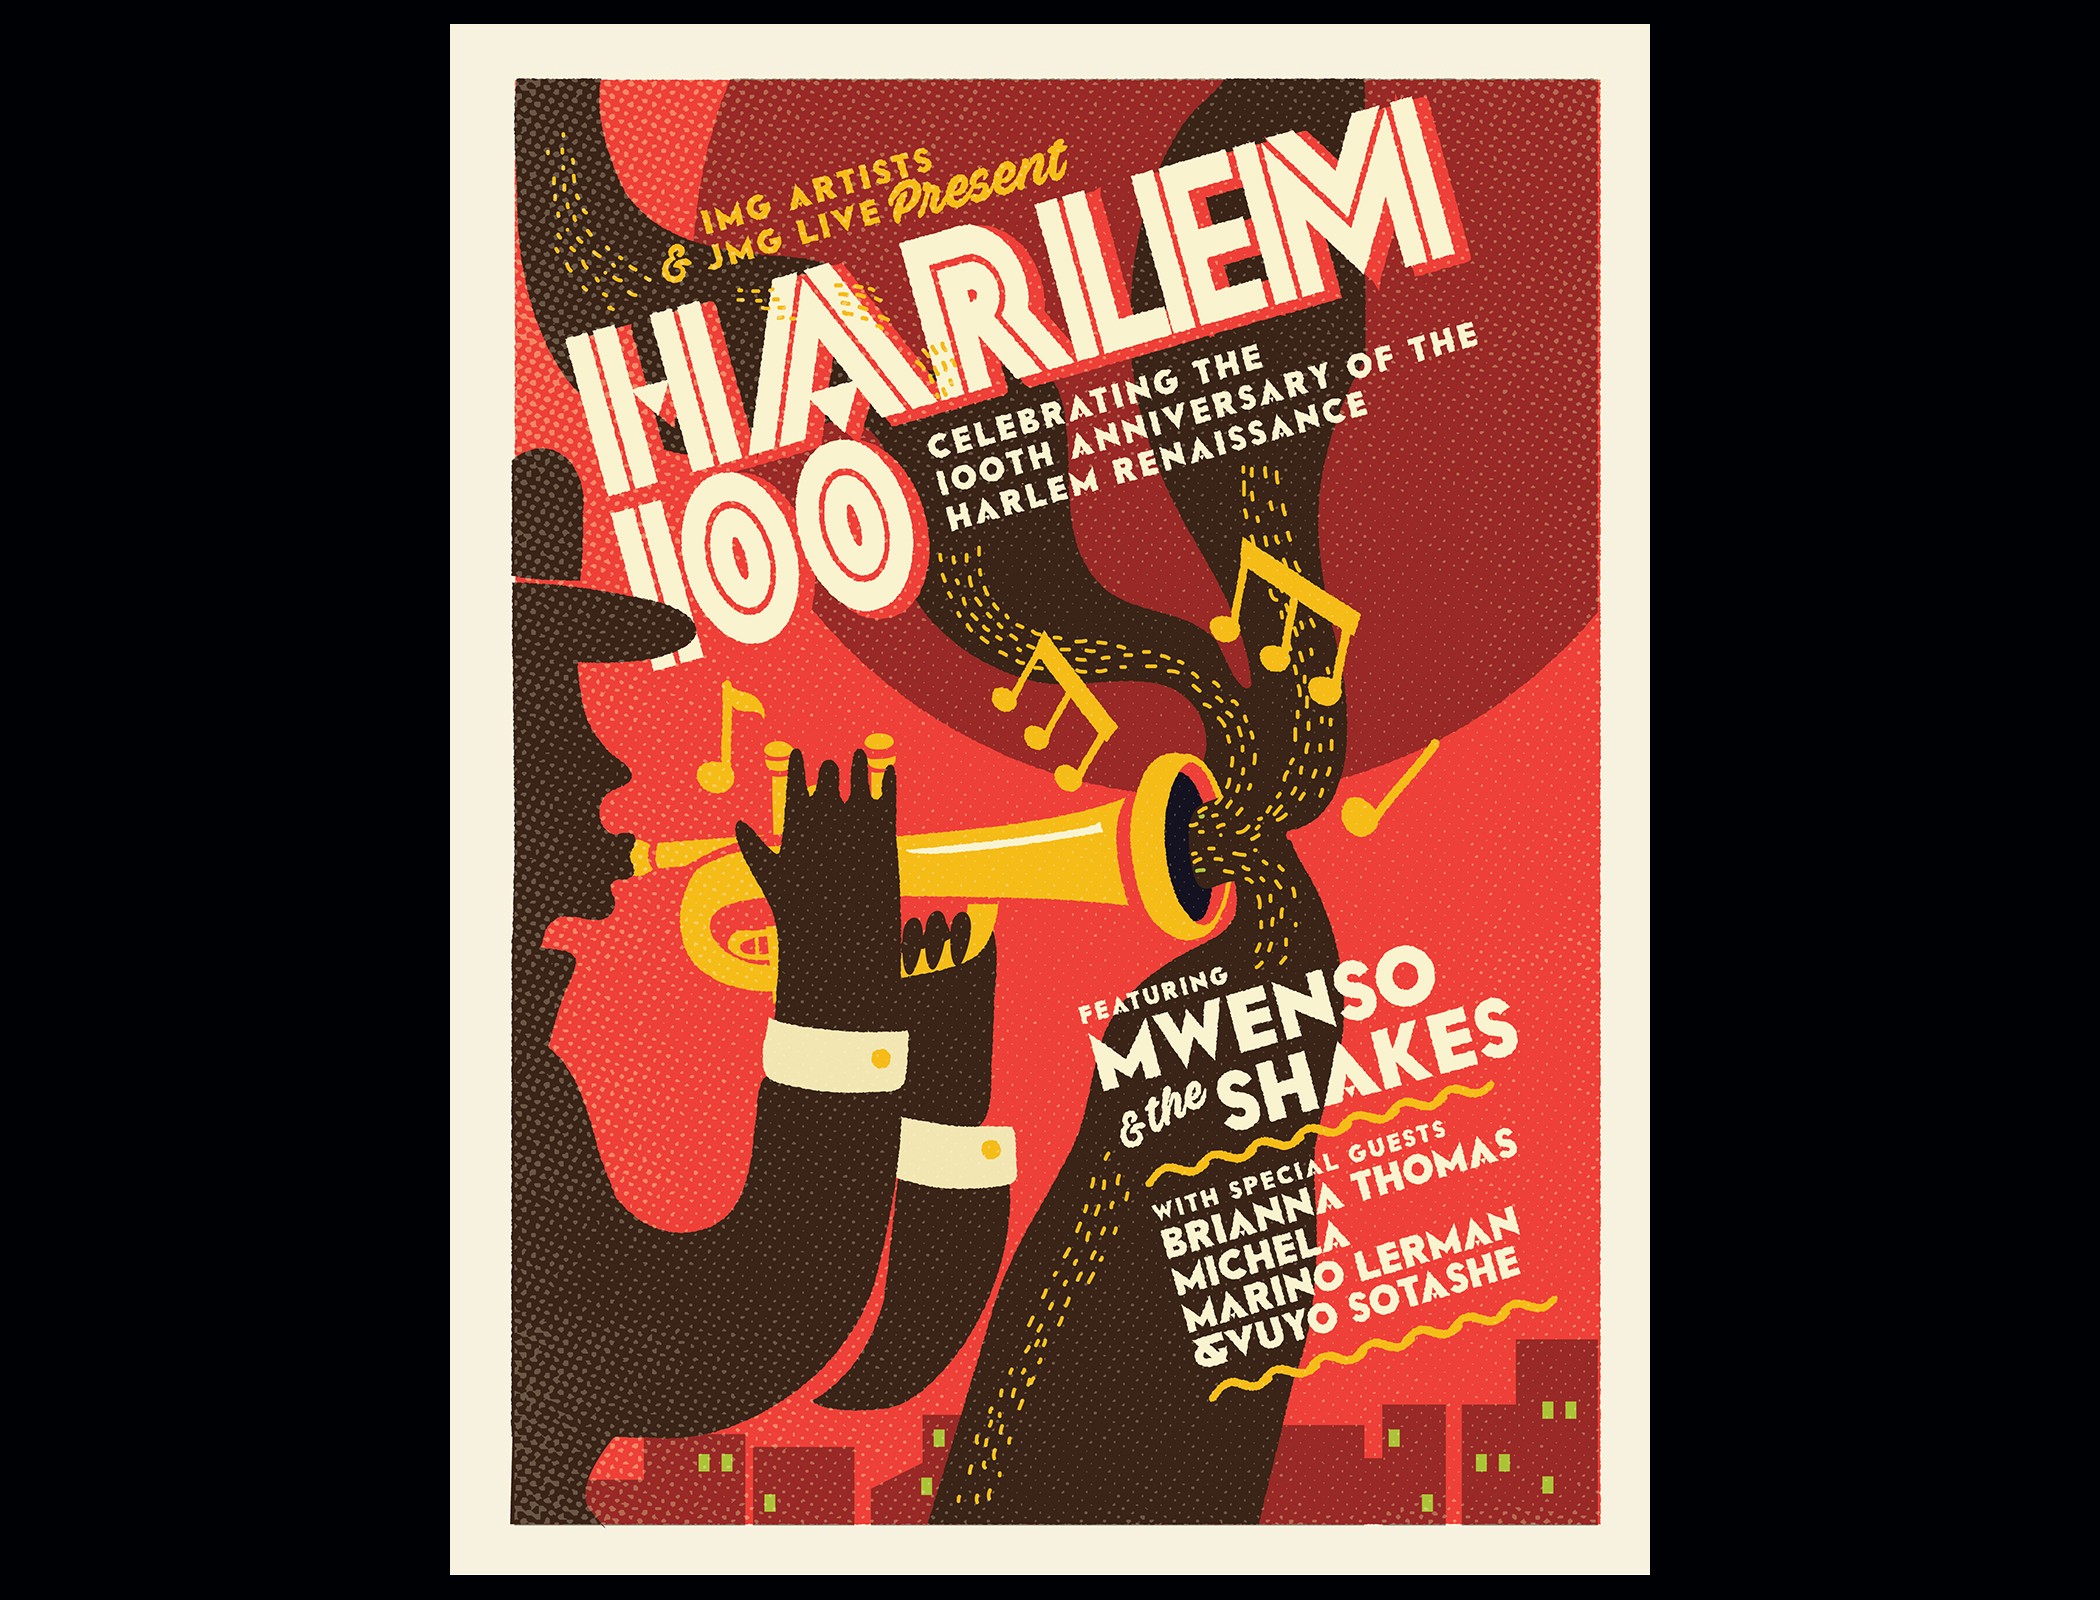 Harlem 100 Featuring Mwenso & The Shakes